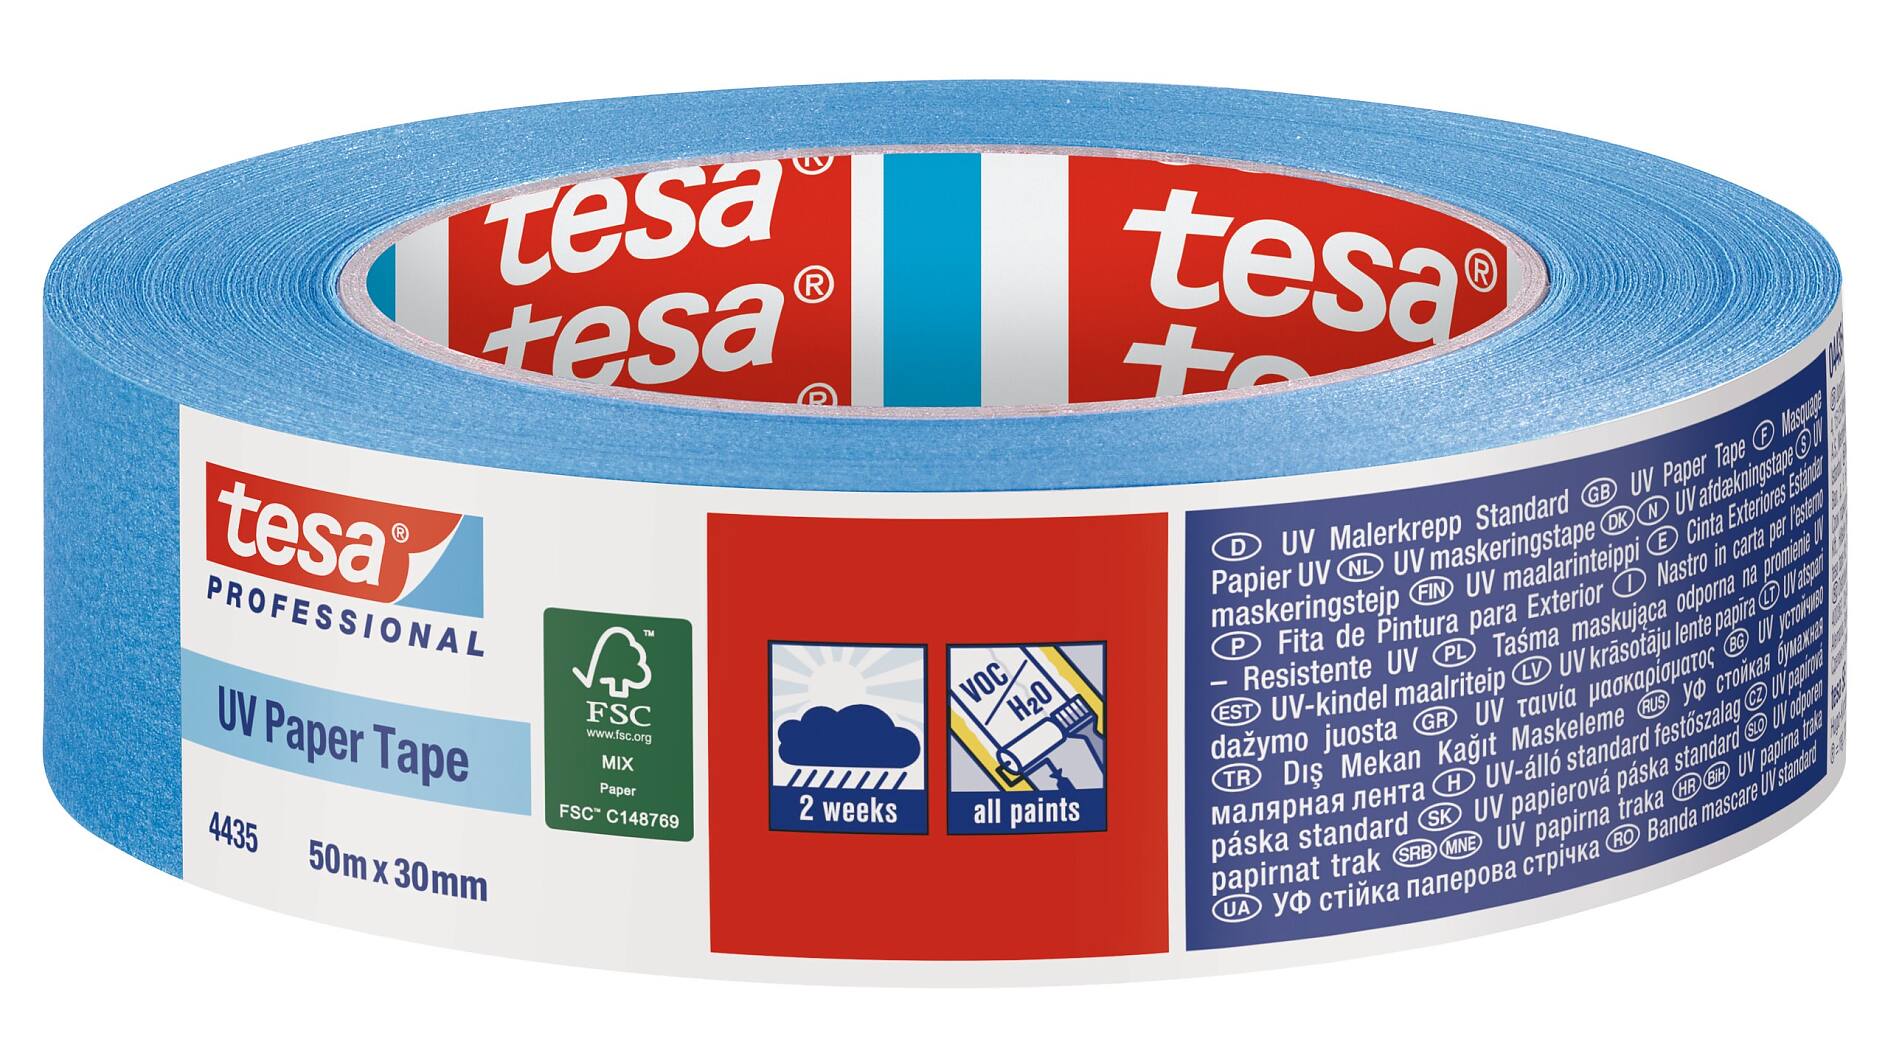 tesa® Professional 4435 UV Paper Tape - tesa